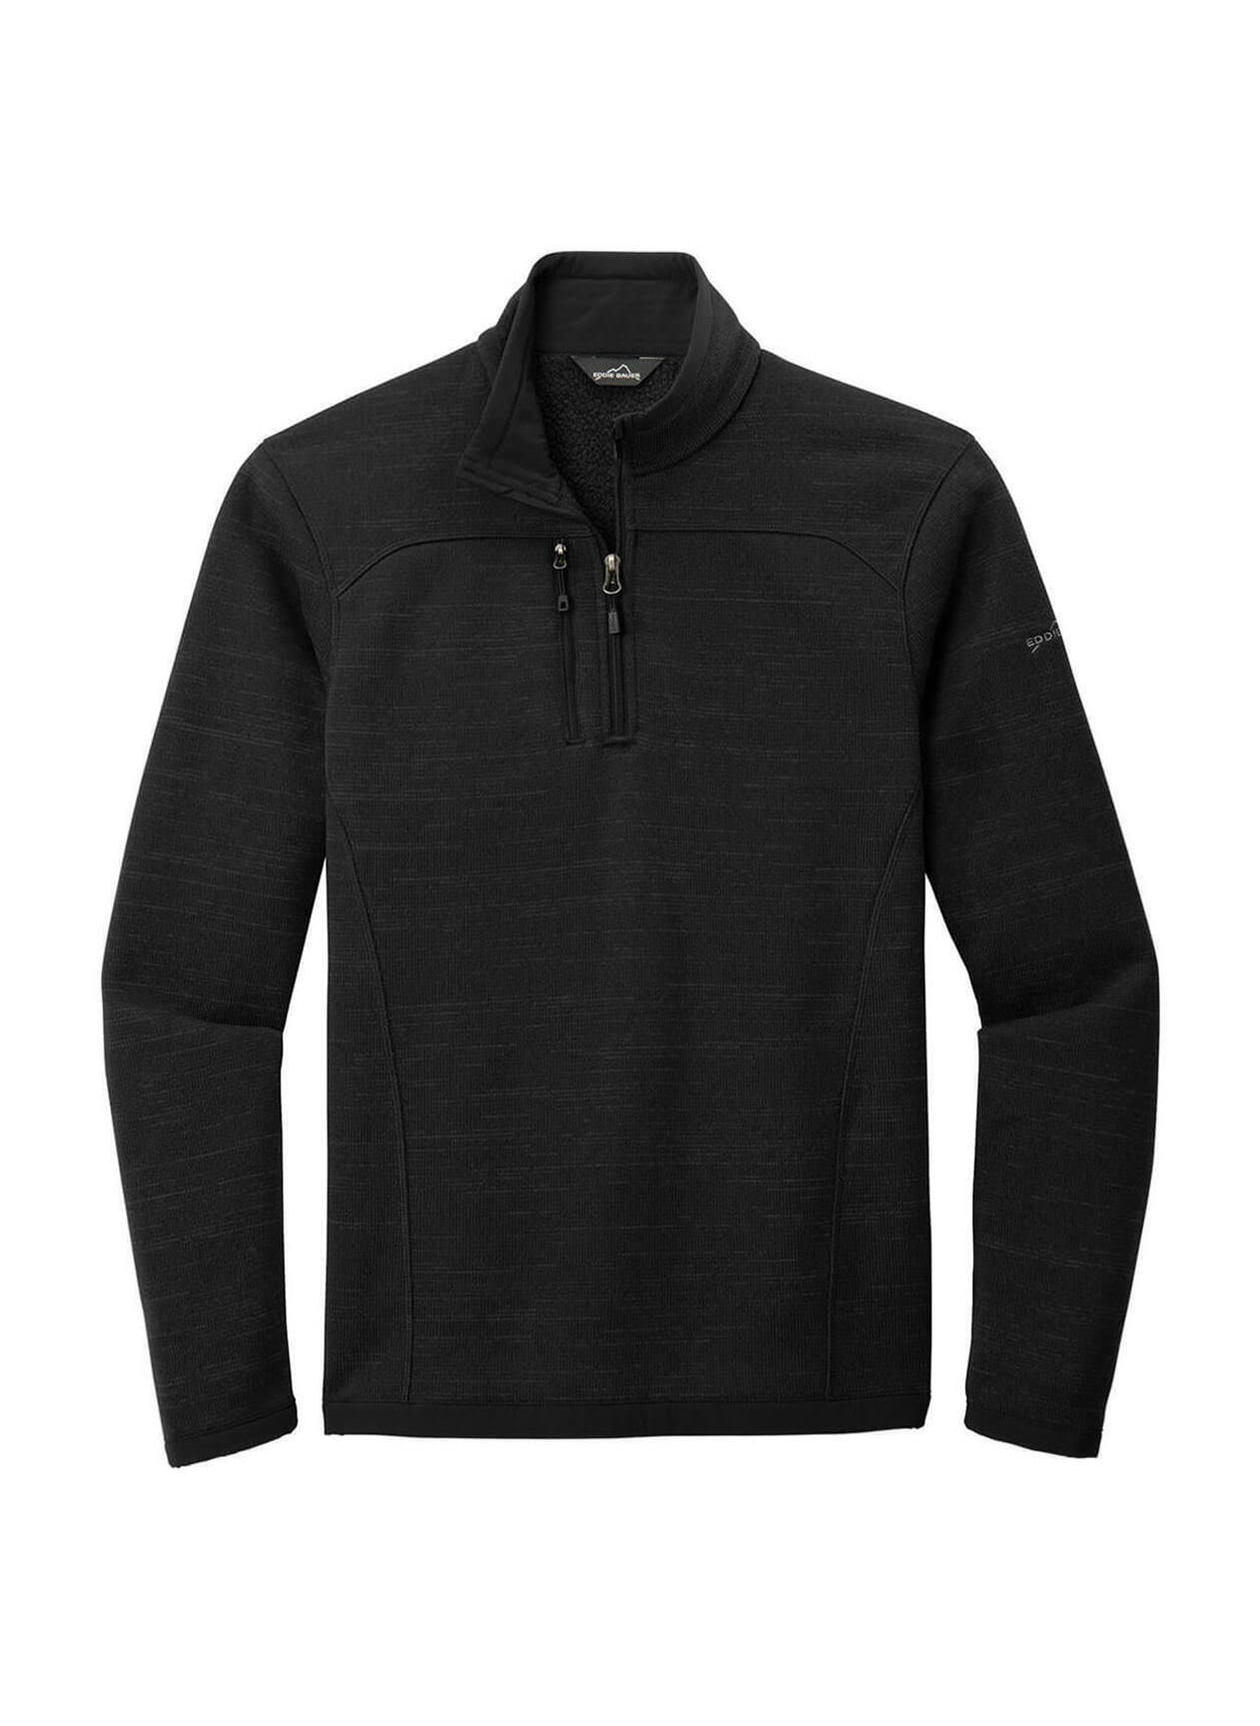 Eddie Bauer polar fleece 1/4 zip pullover NWT mens L large black $55